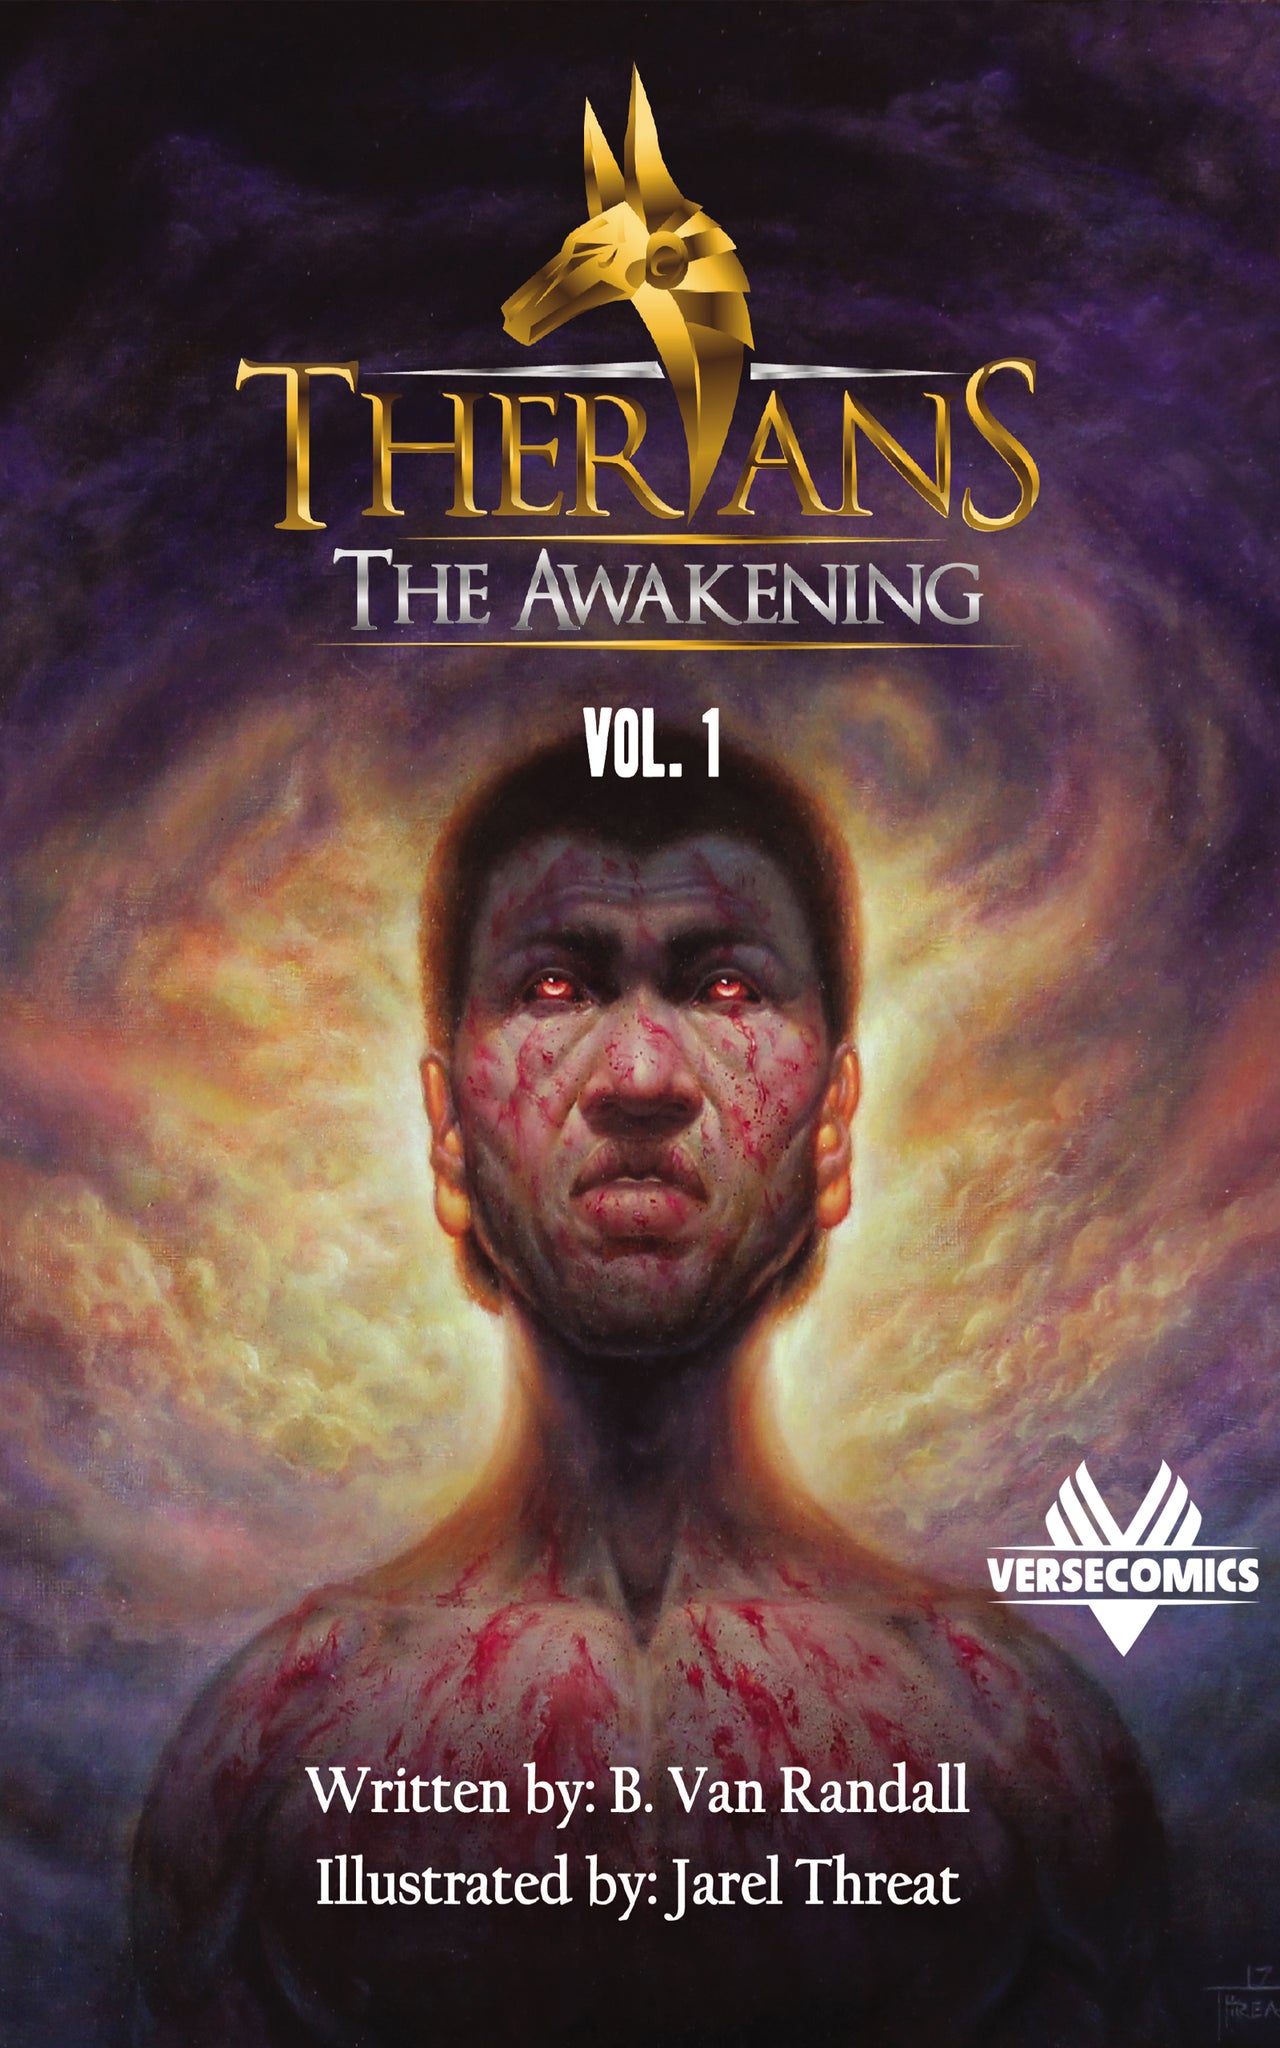 Therians: The Awakening (TV Series) - IMDb